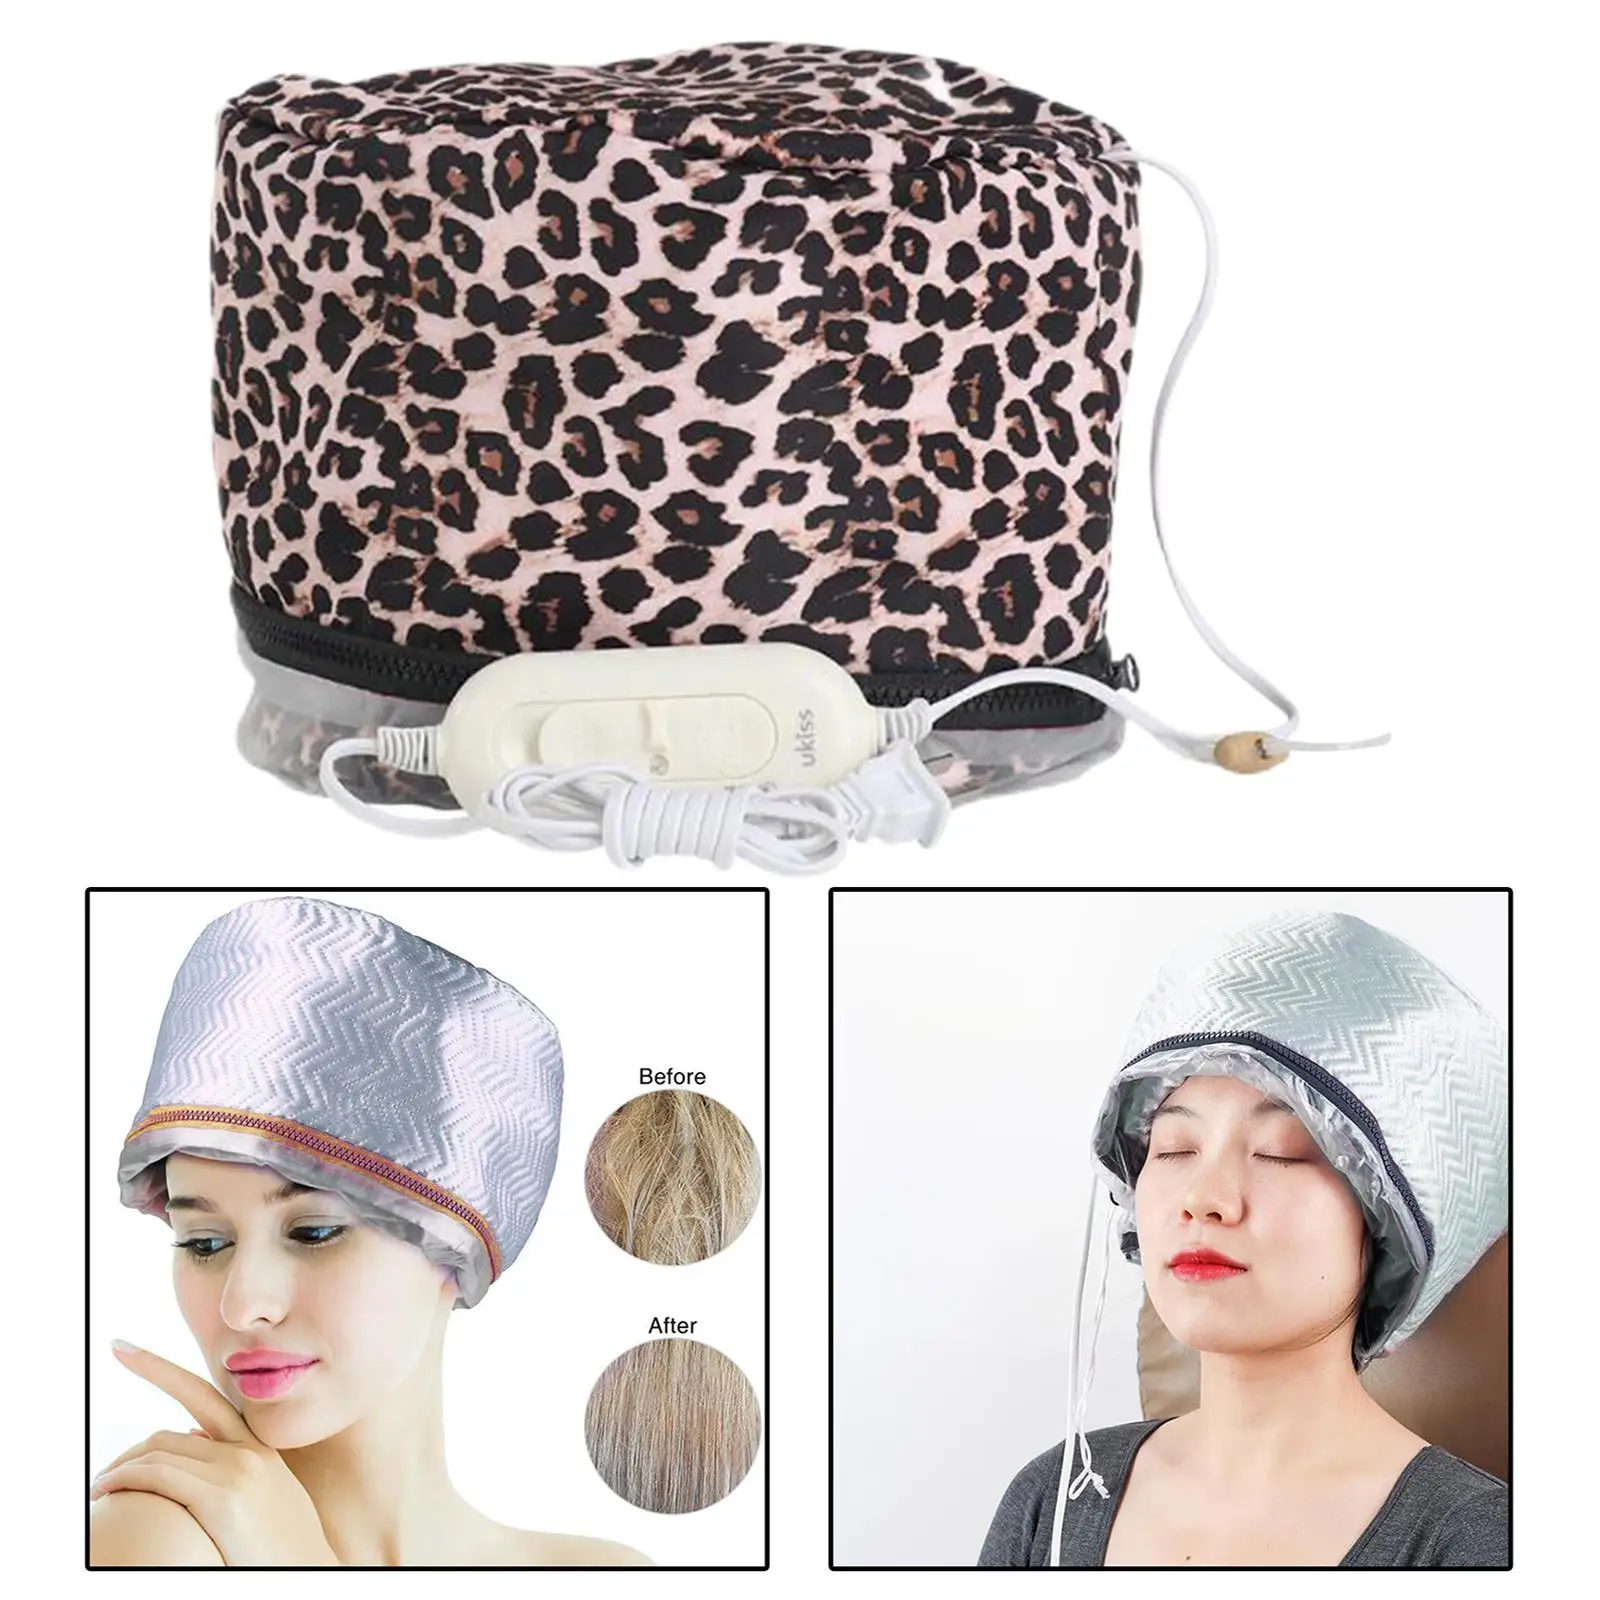 Hair Steamer Heating Hat 110V Hair SPA Waterproof Thermal Caps Personal Care Adjustable Temperature Control Leopard Print US